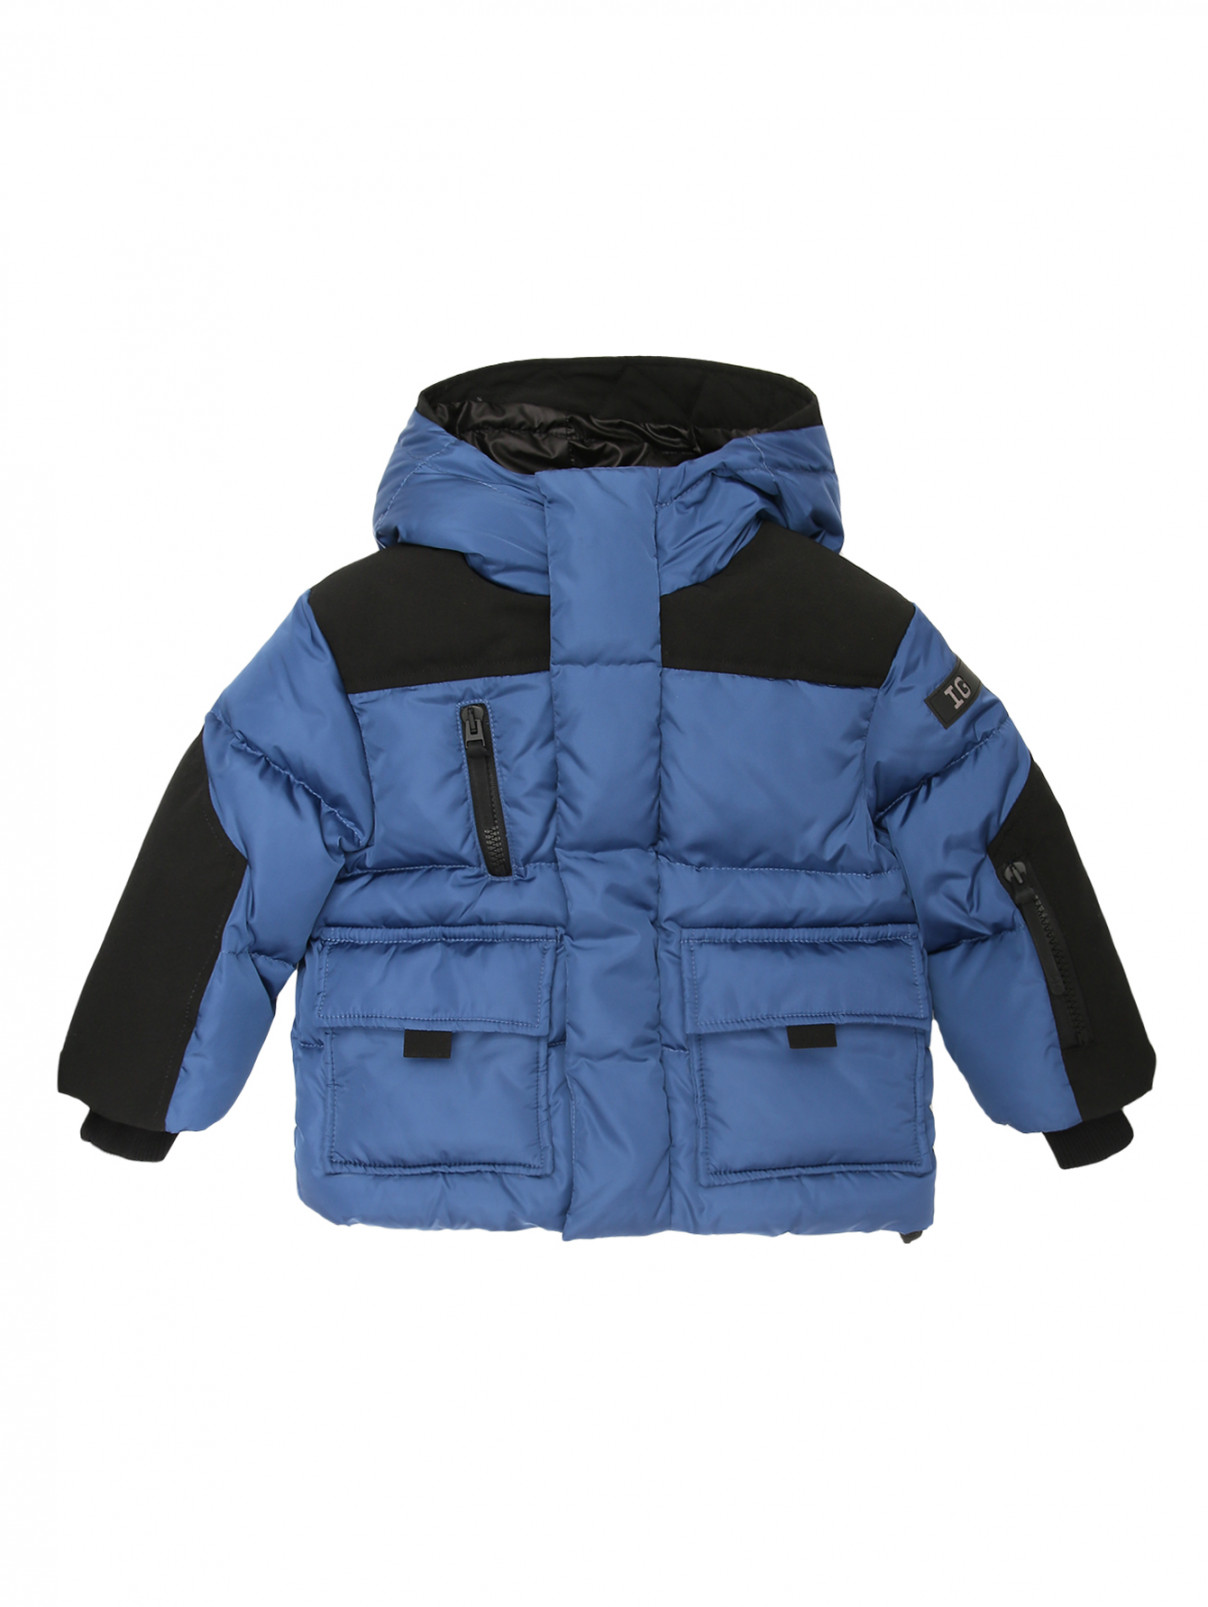 Пуховая куртка с капюшоном Il Gufo  –  Общий вид  – Цвет:  Синий